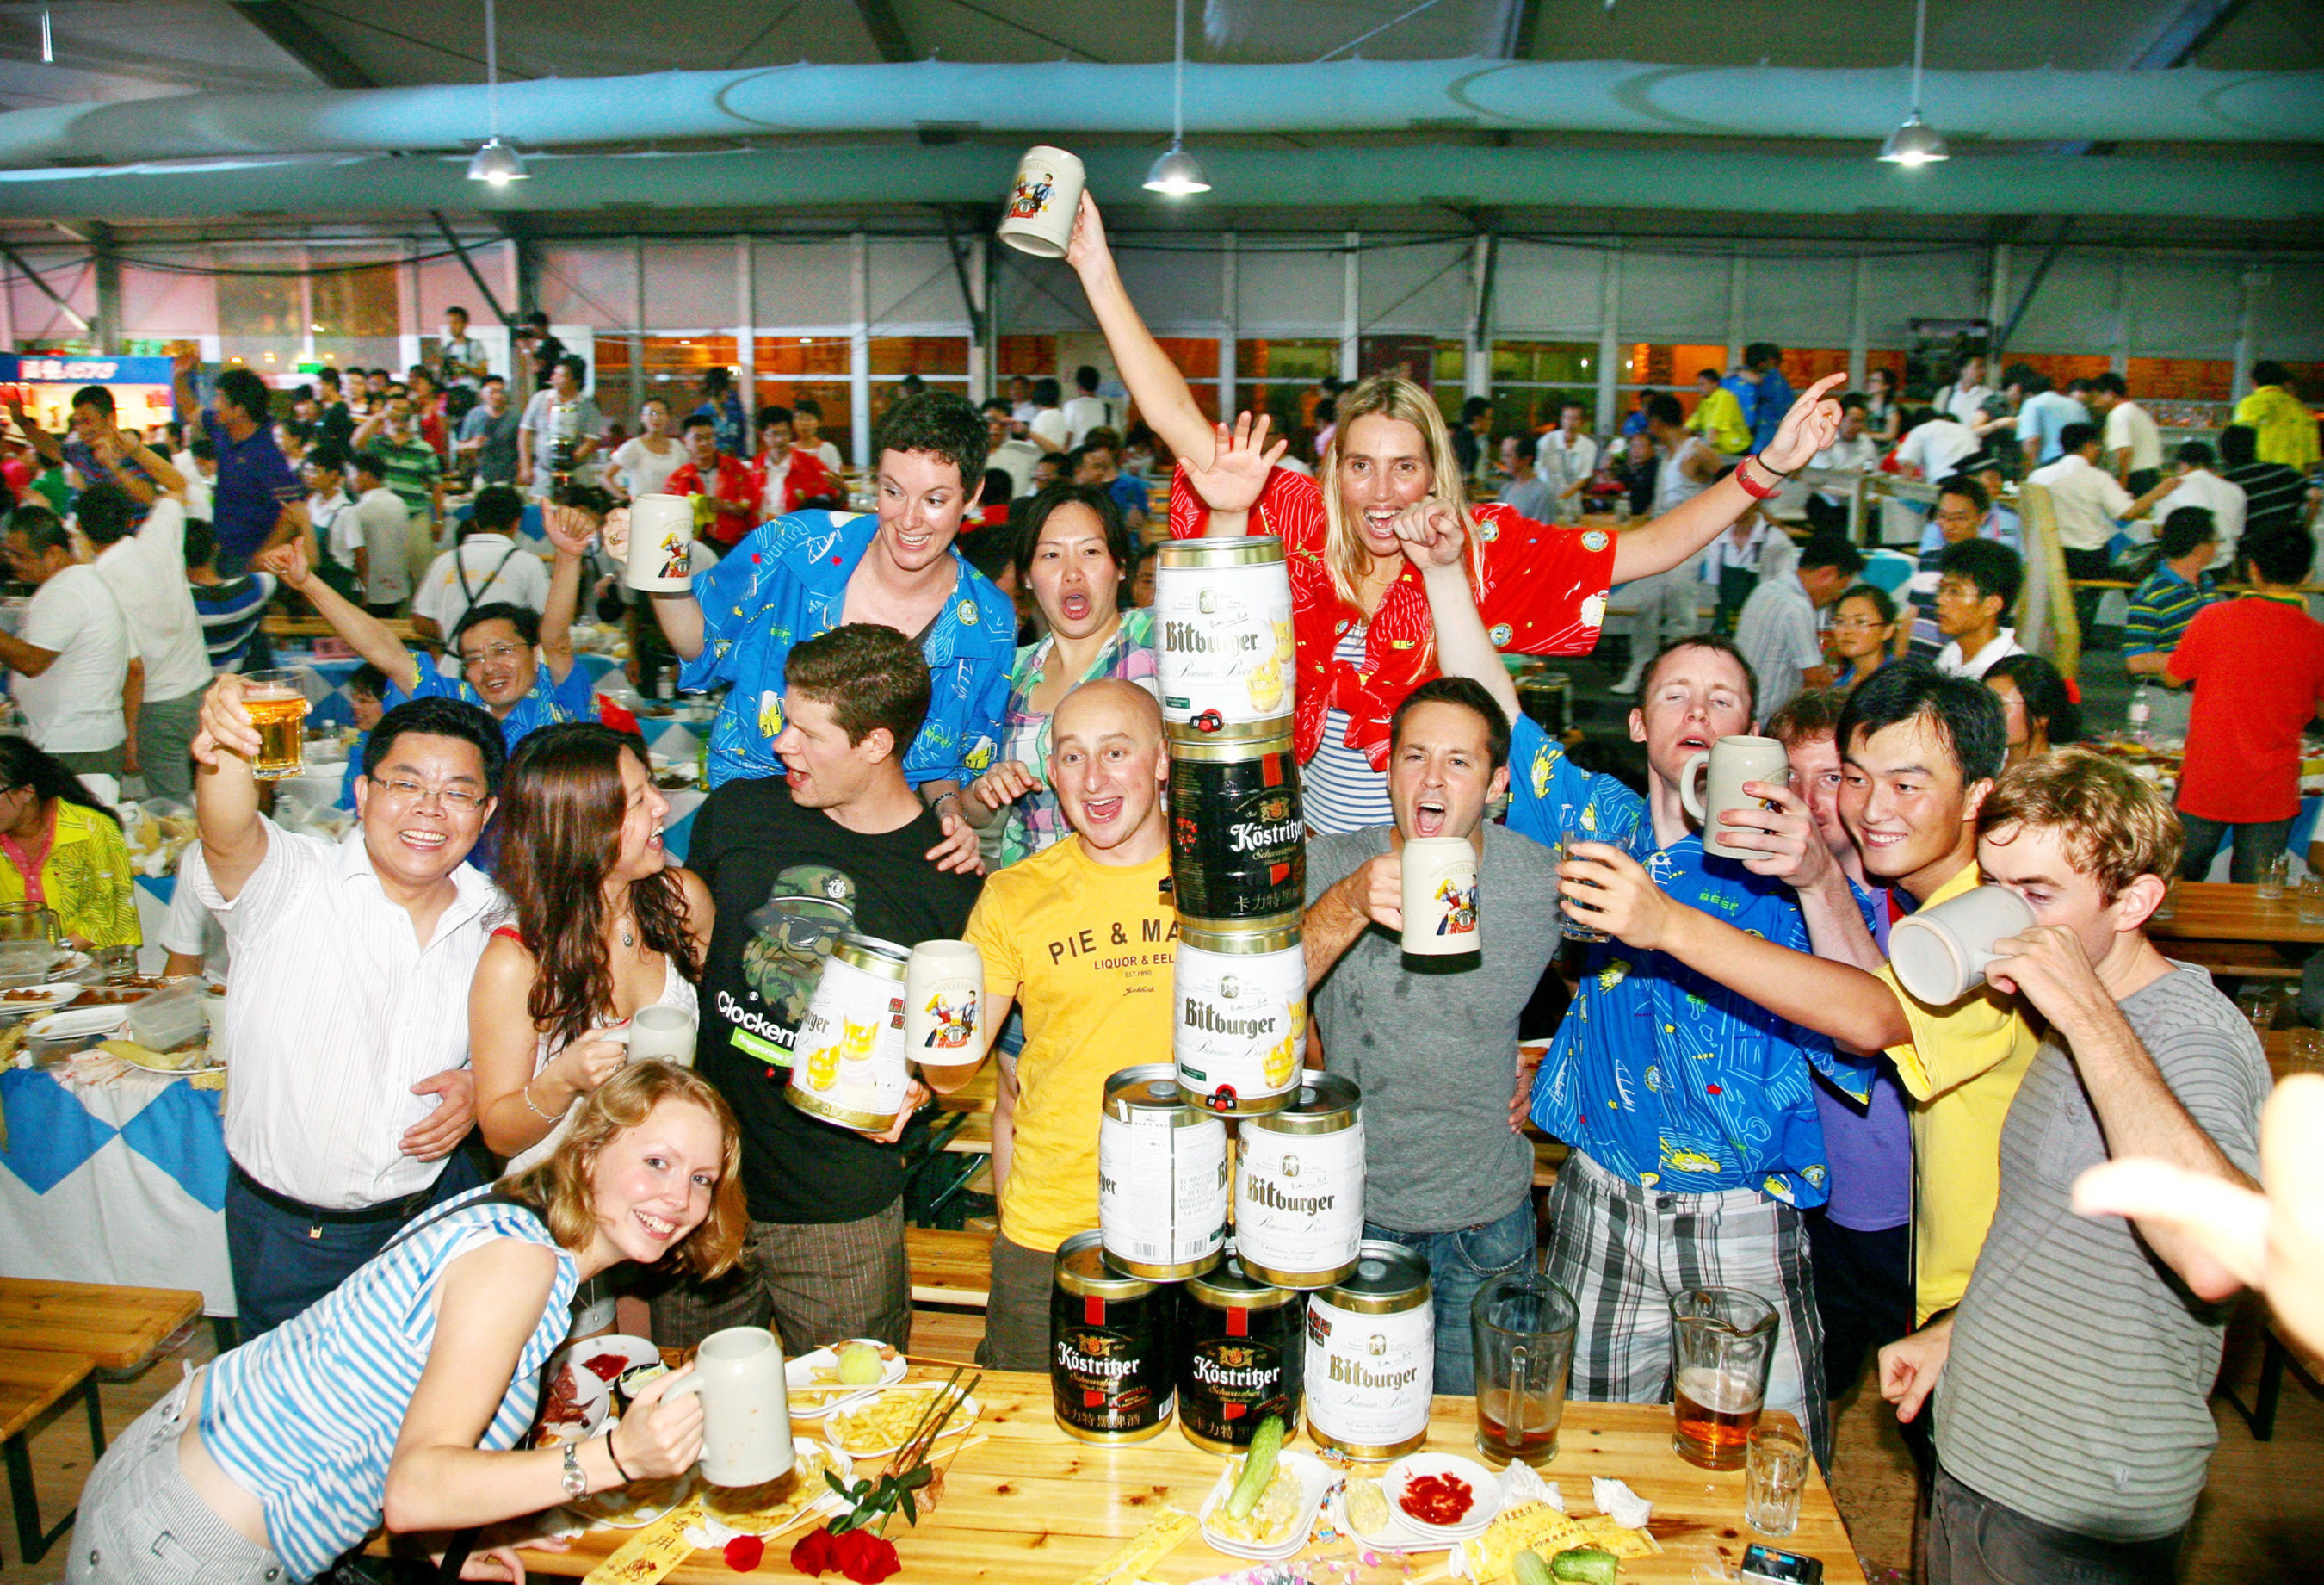 2015 Qingdao International Beer Festival Kicks Off in August